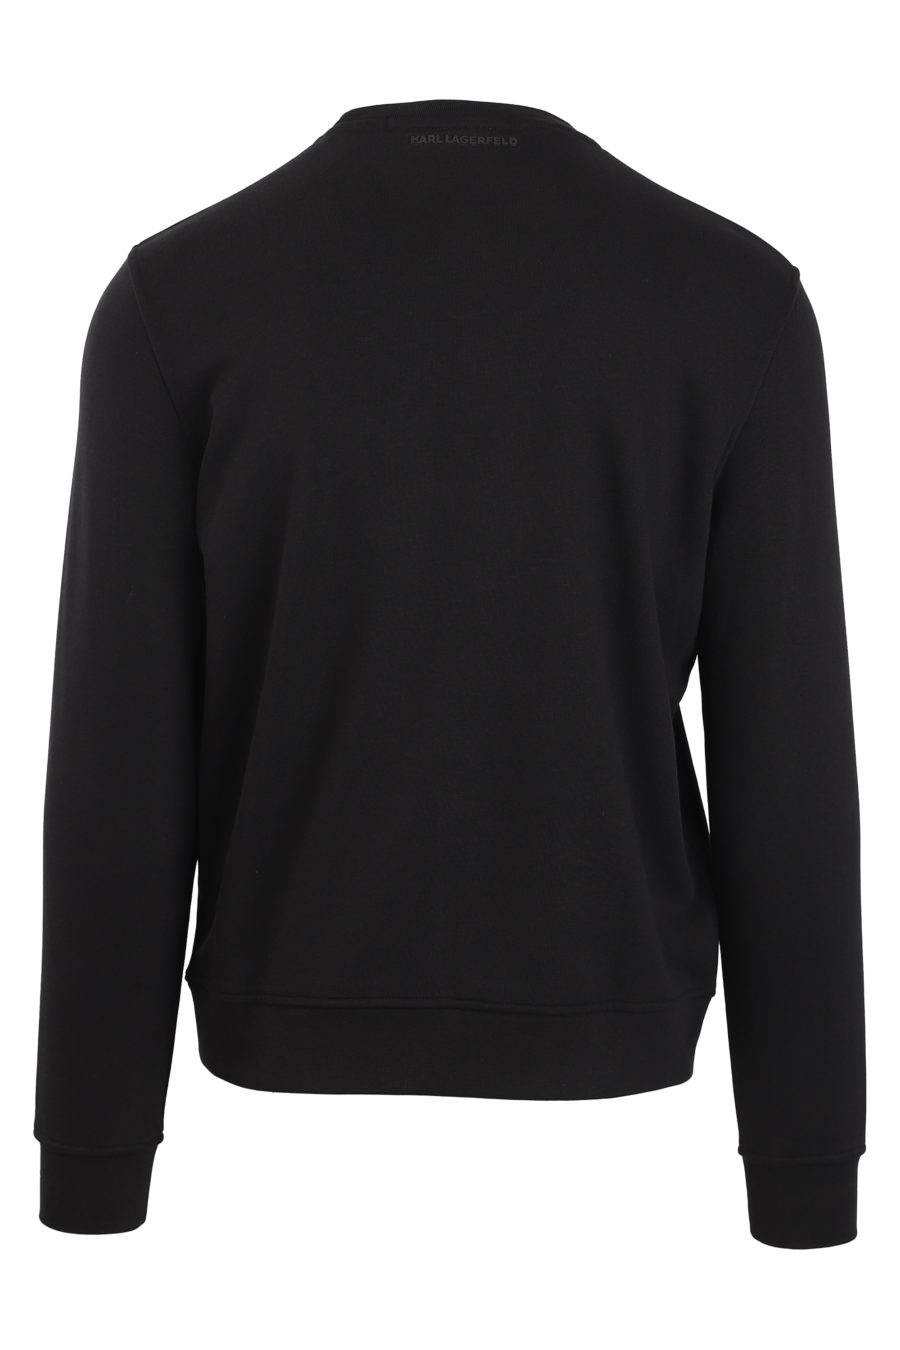 Schwarzes Sweatshirt mit mehrfarbigem Maxi-Logo - IMG 0895